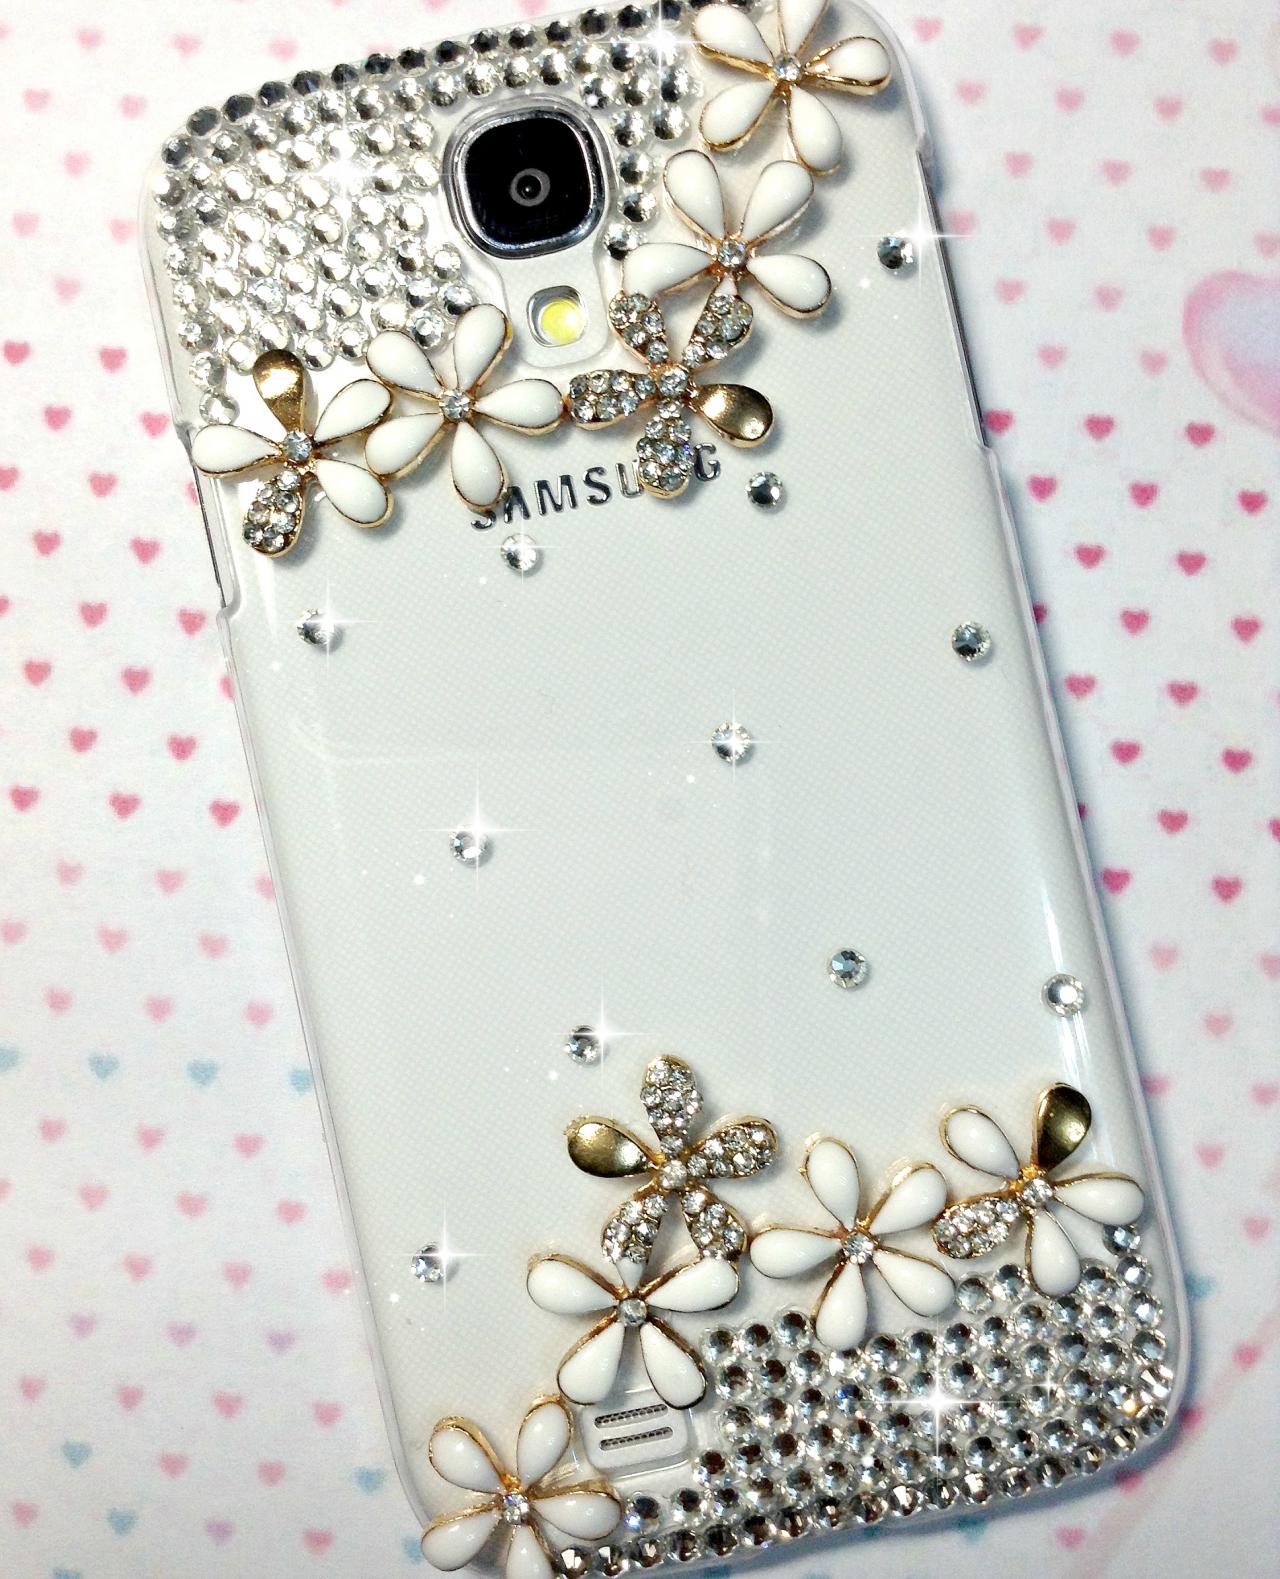 3d Handmade Flower Design Case Cover For Samsung Galaxy S 4 S4 Iv Lte I9500 I9505